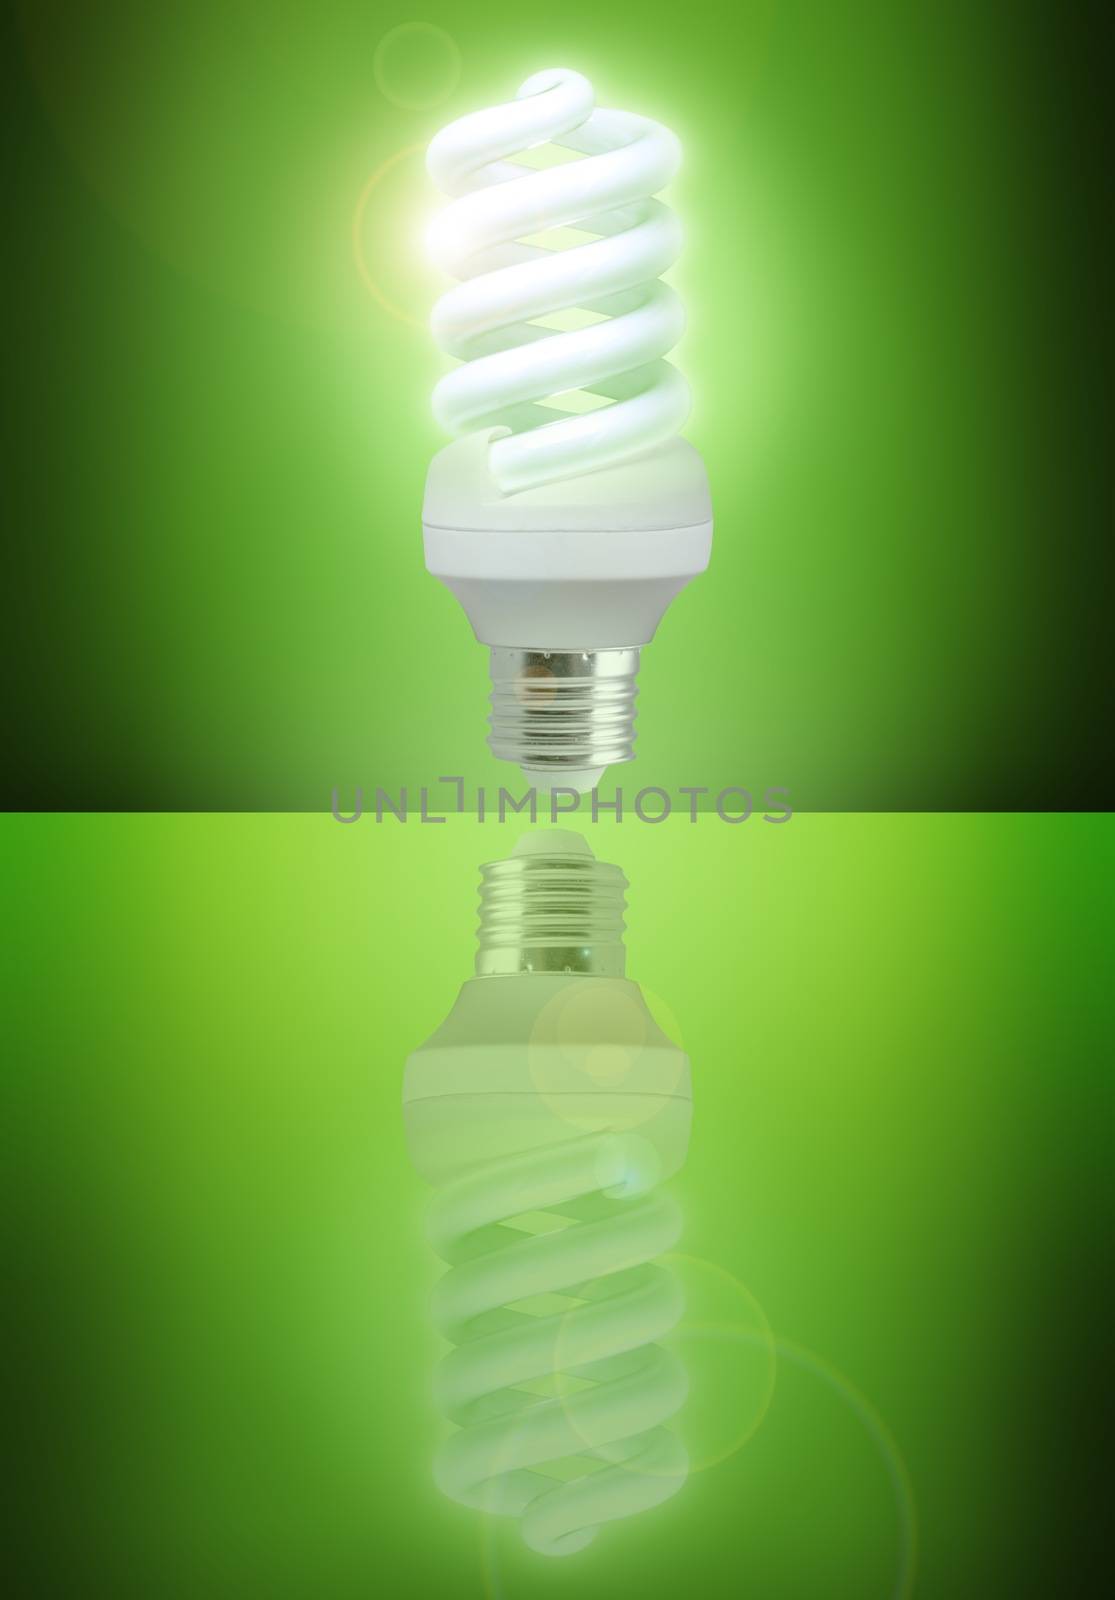 Eco-save bulb by Onigiristudio